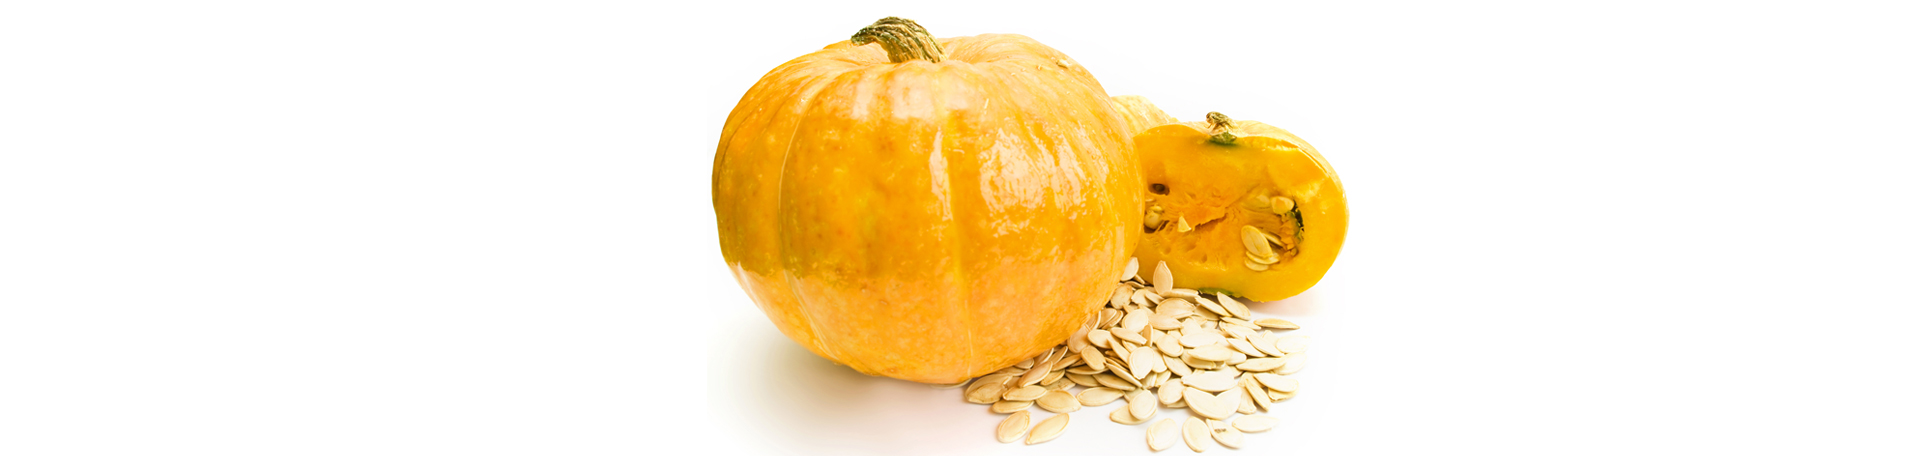 Augusta chiropractic nutrition info on the pumpkin